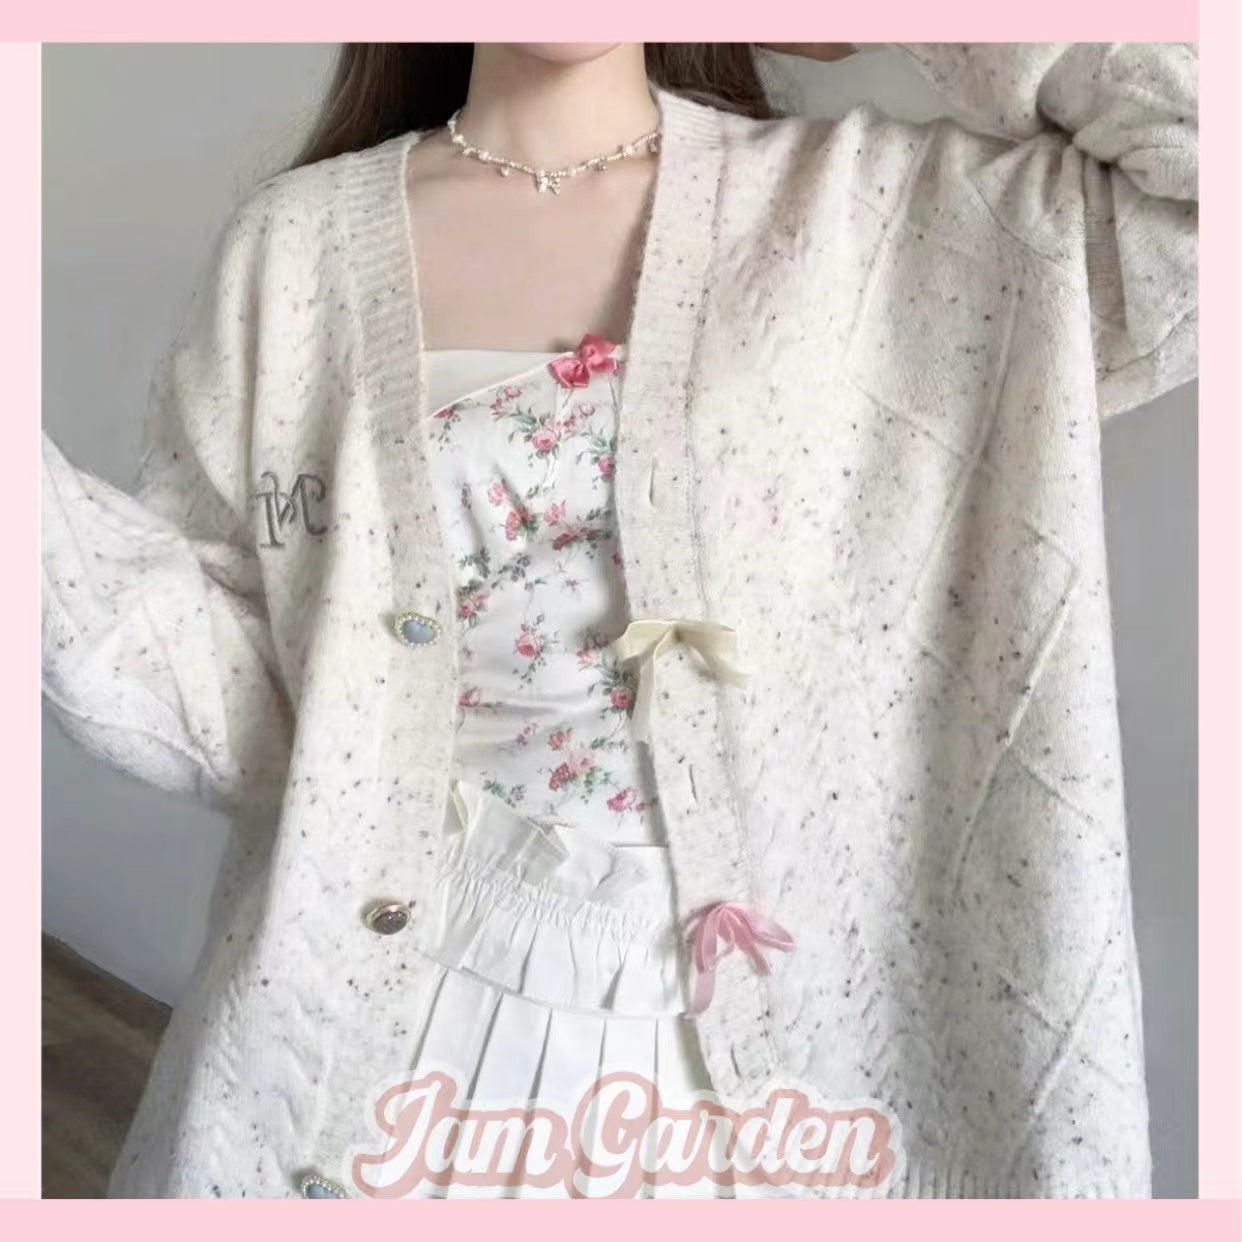 Autumn New Lazy Wind Color Mottled Long-Sleeved Knitted Cardigan Sweater Gentle Korean Coat - Jam Garden